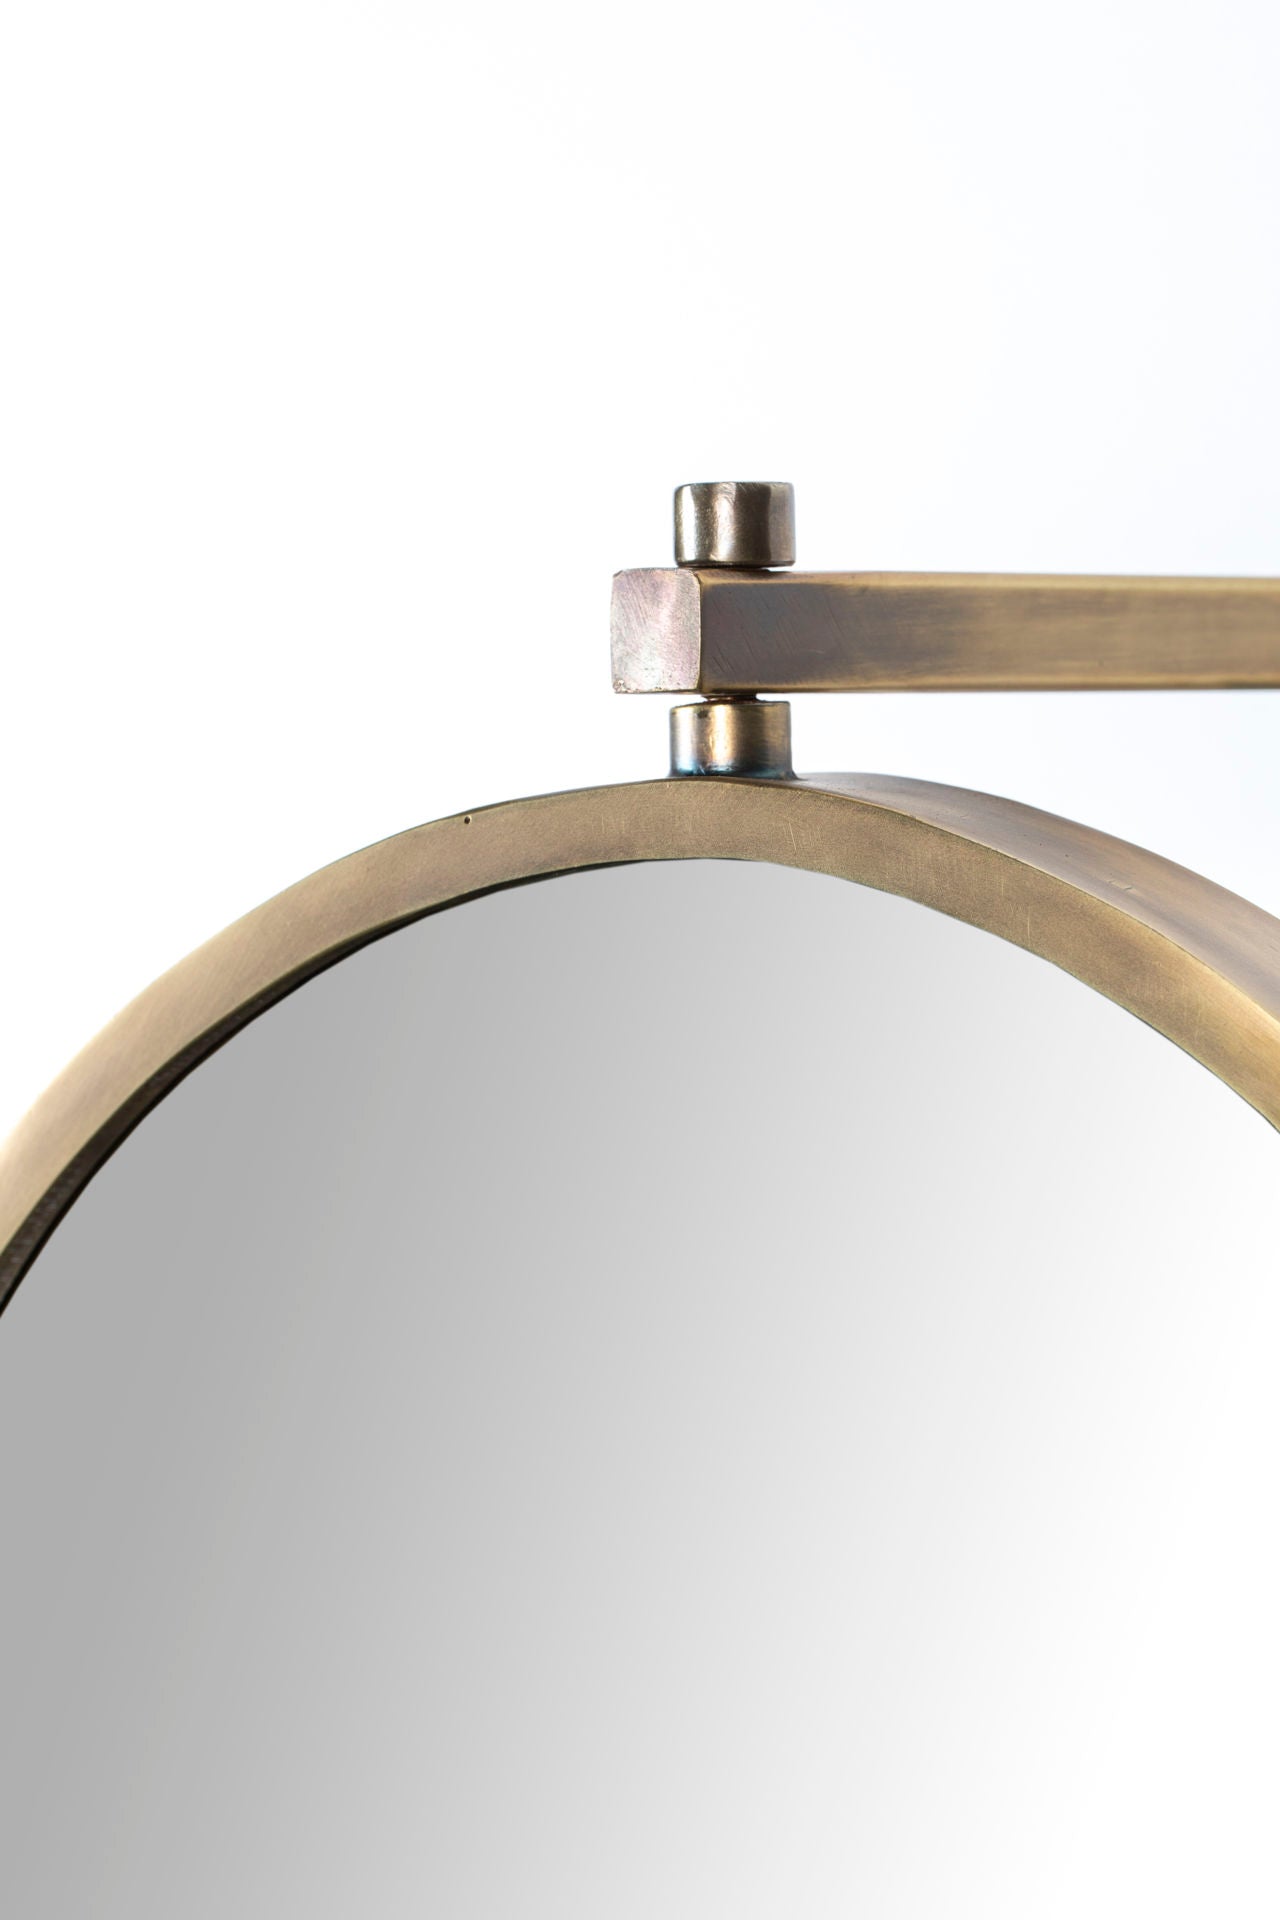 Nancy's Ironton Spiegel - Modern - Messing - Glas, IJzer - 4 cm x 30,5 cm x 48 cm